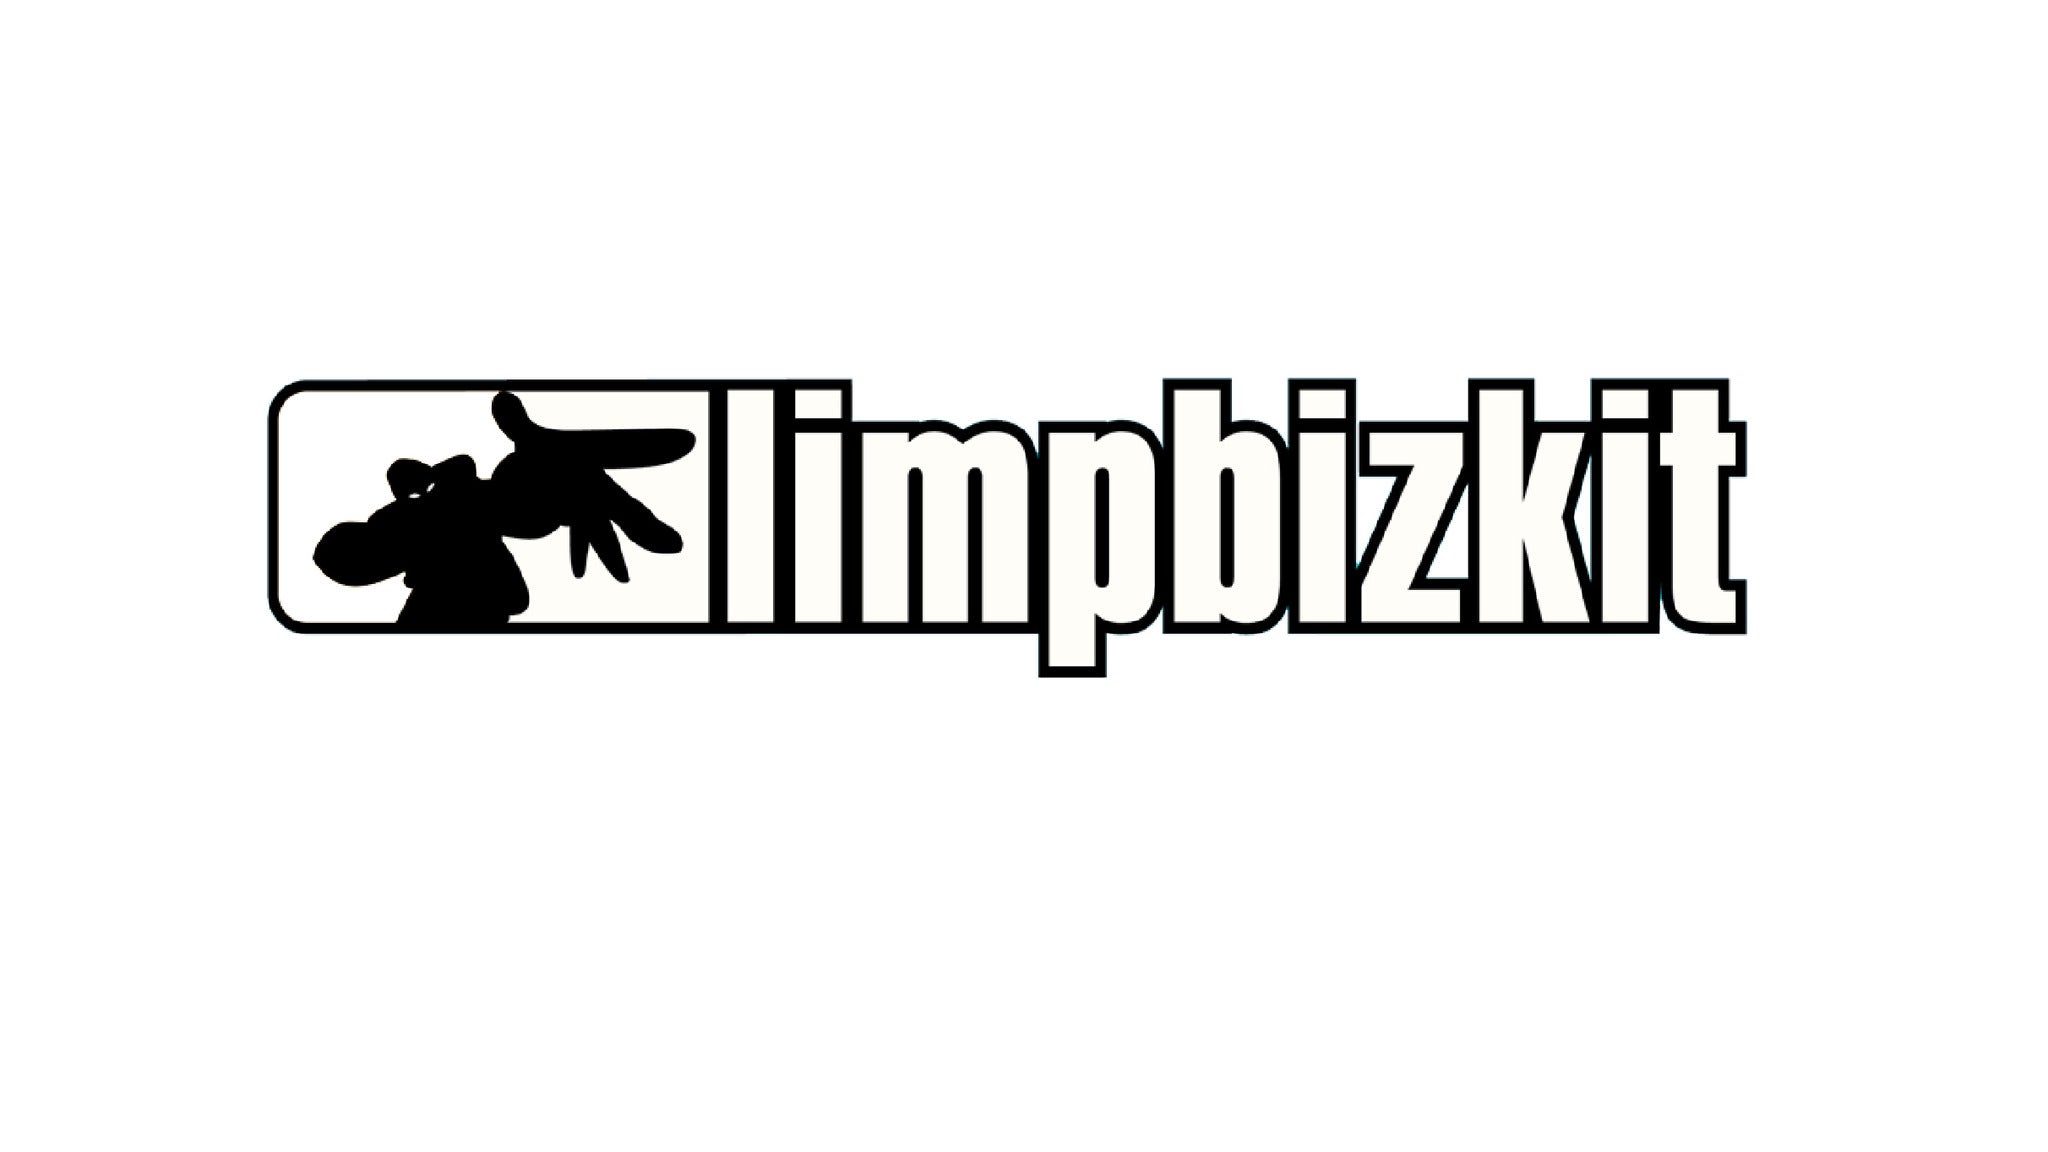 Limp Bizkit in Hollywood promo photo for Live Nation presale offer code